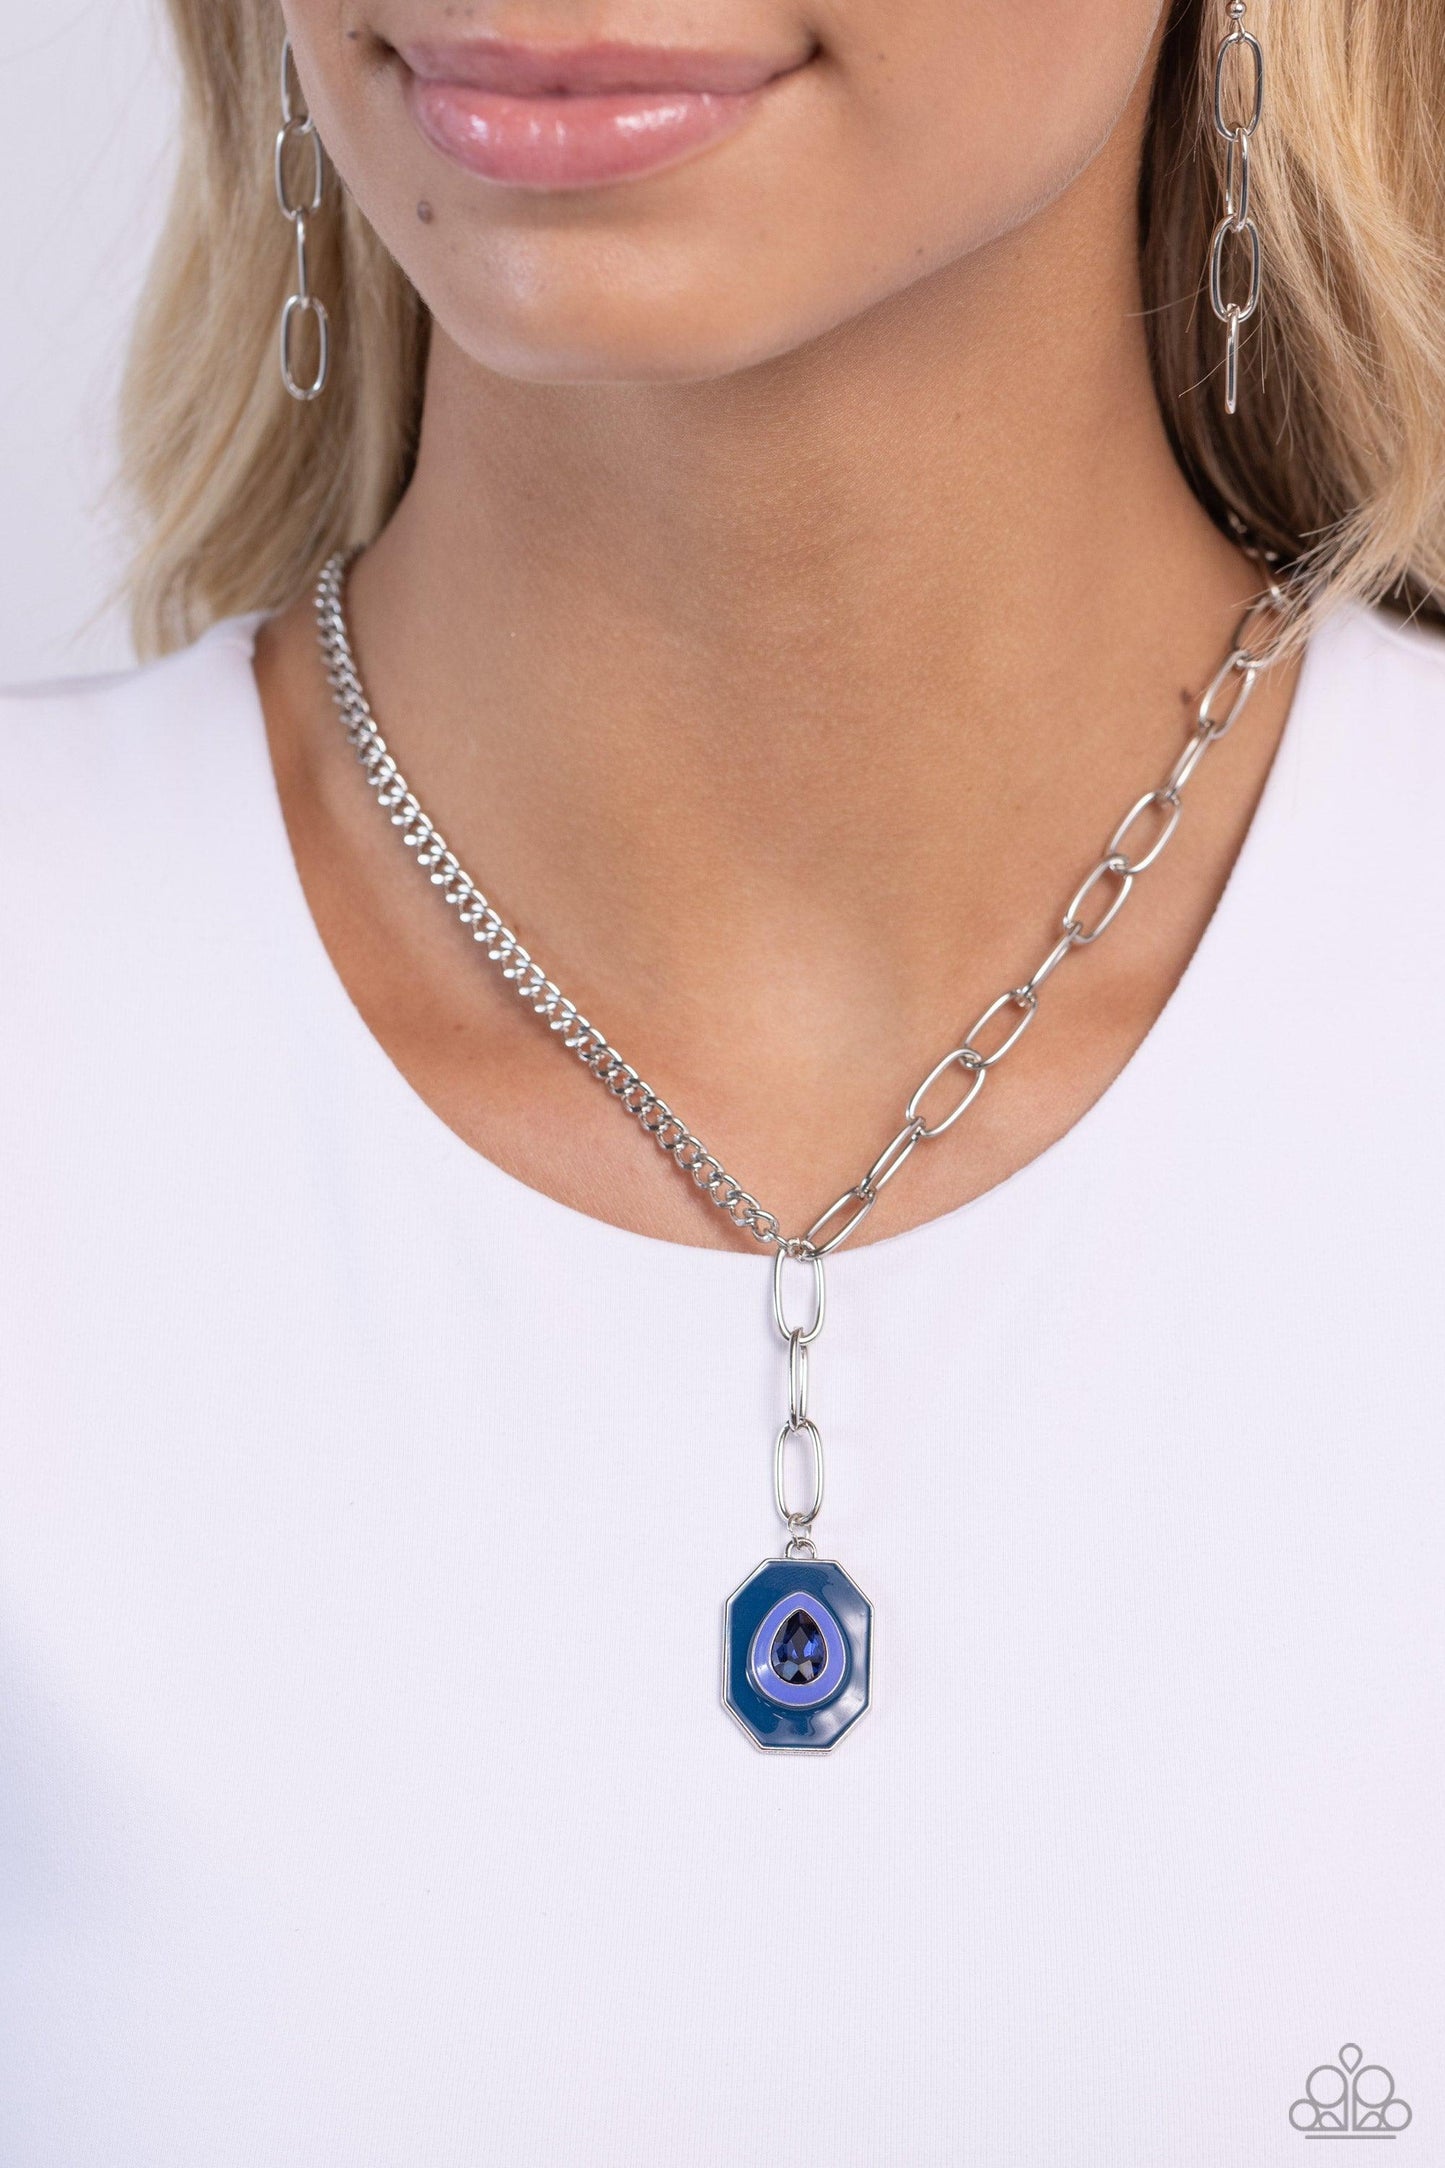 Paparazzi Accessories - Hexagonal Hallmark - Blue Necklace - Bling by JessieK